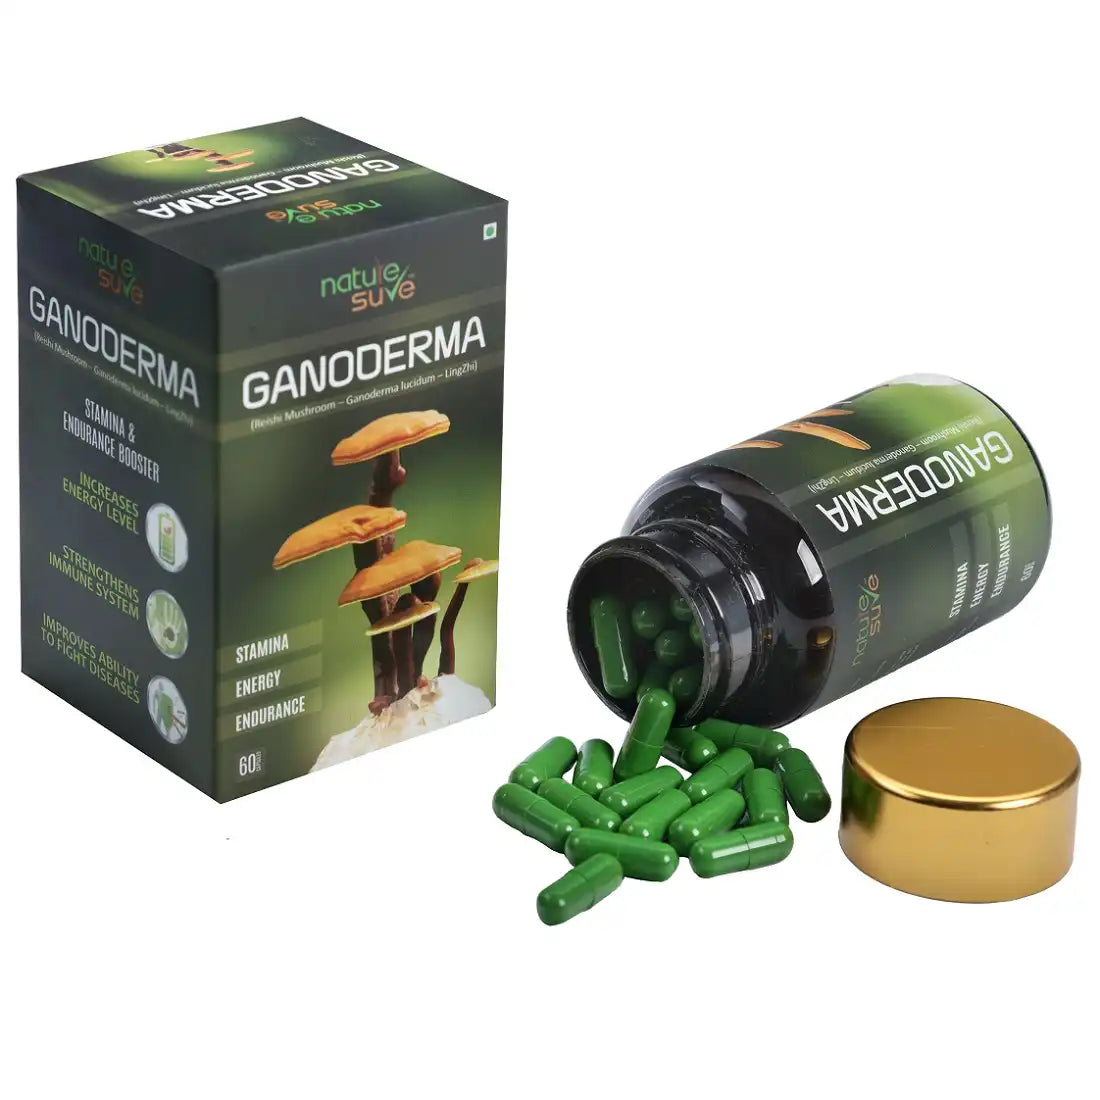 Every Pack Contains 60 Capsules of Nature Sure Ganoderma LingZhi Reishi Mushroom - everteen-neud.com